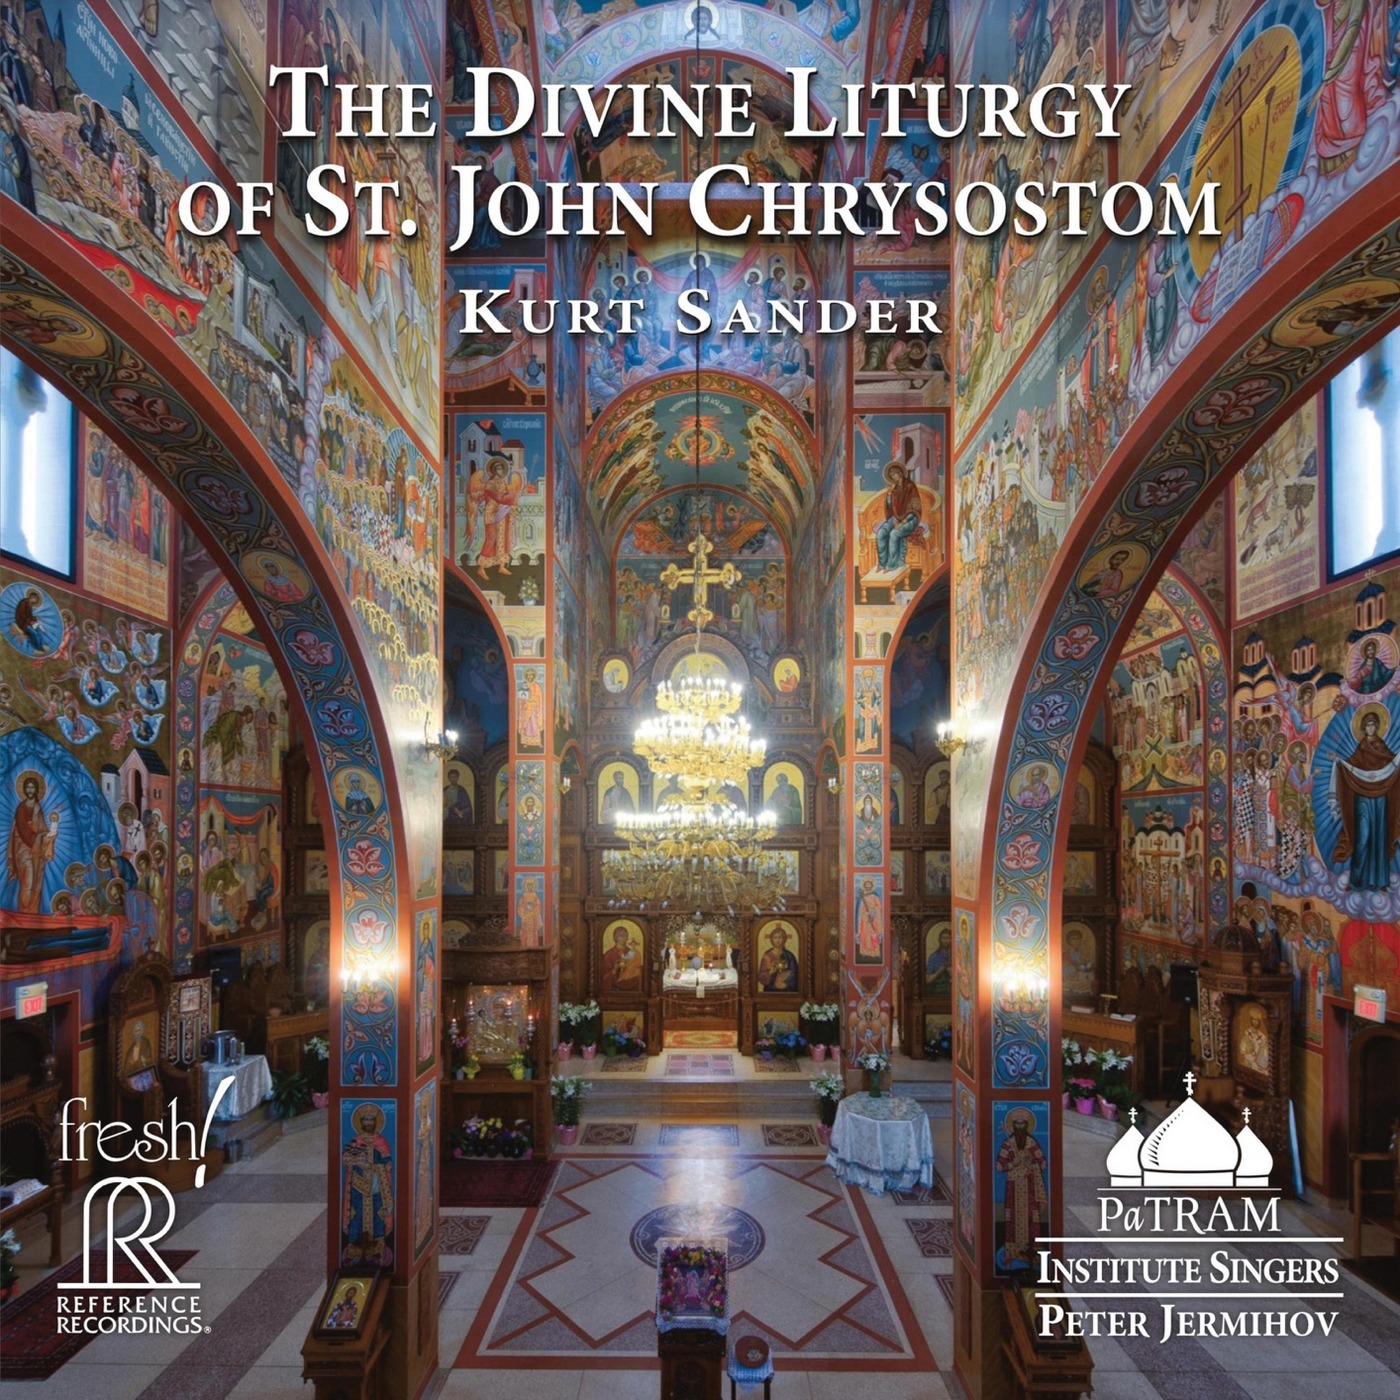 PaTRAM Institute Singers & Peter Jermihov - Kurt Sander: The Divine Liturgy of St. John Chrysostom (2019) [FLAC 24bit/192kHz]